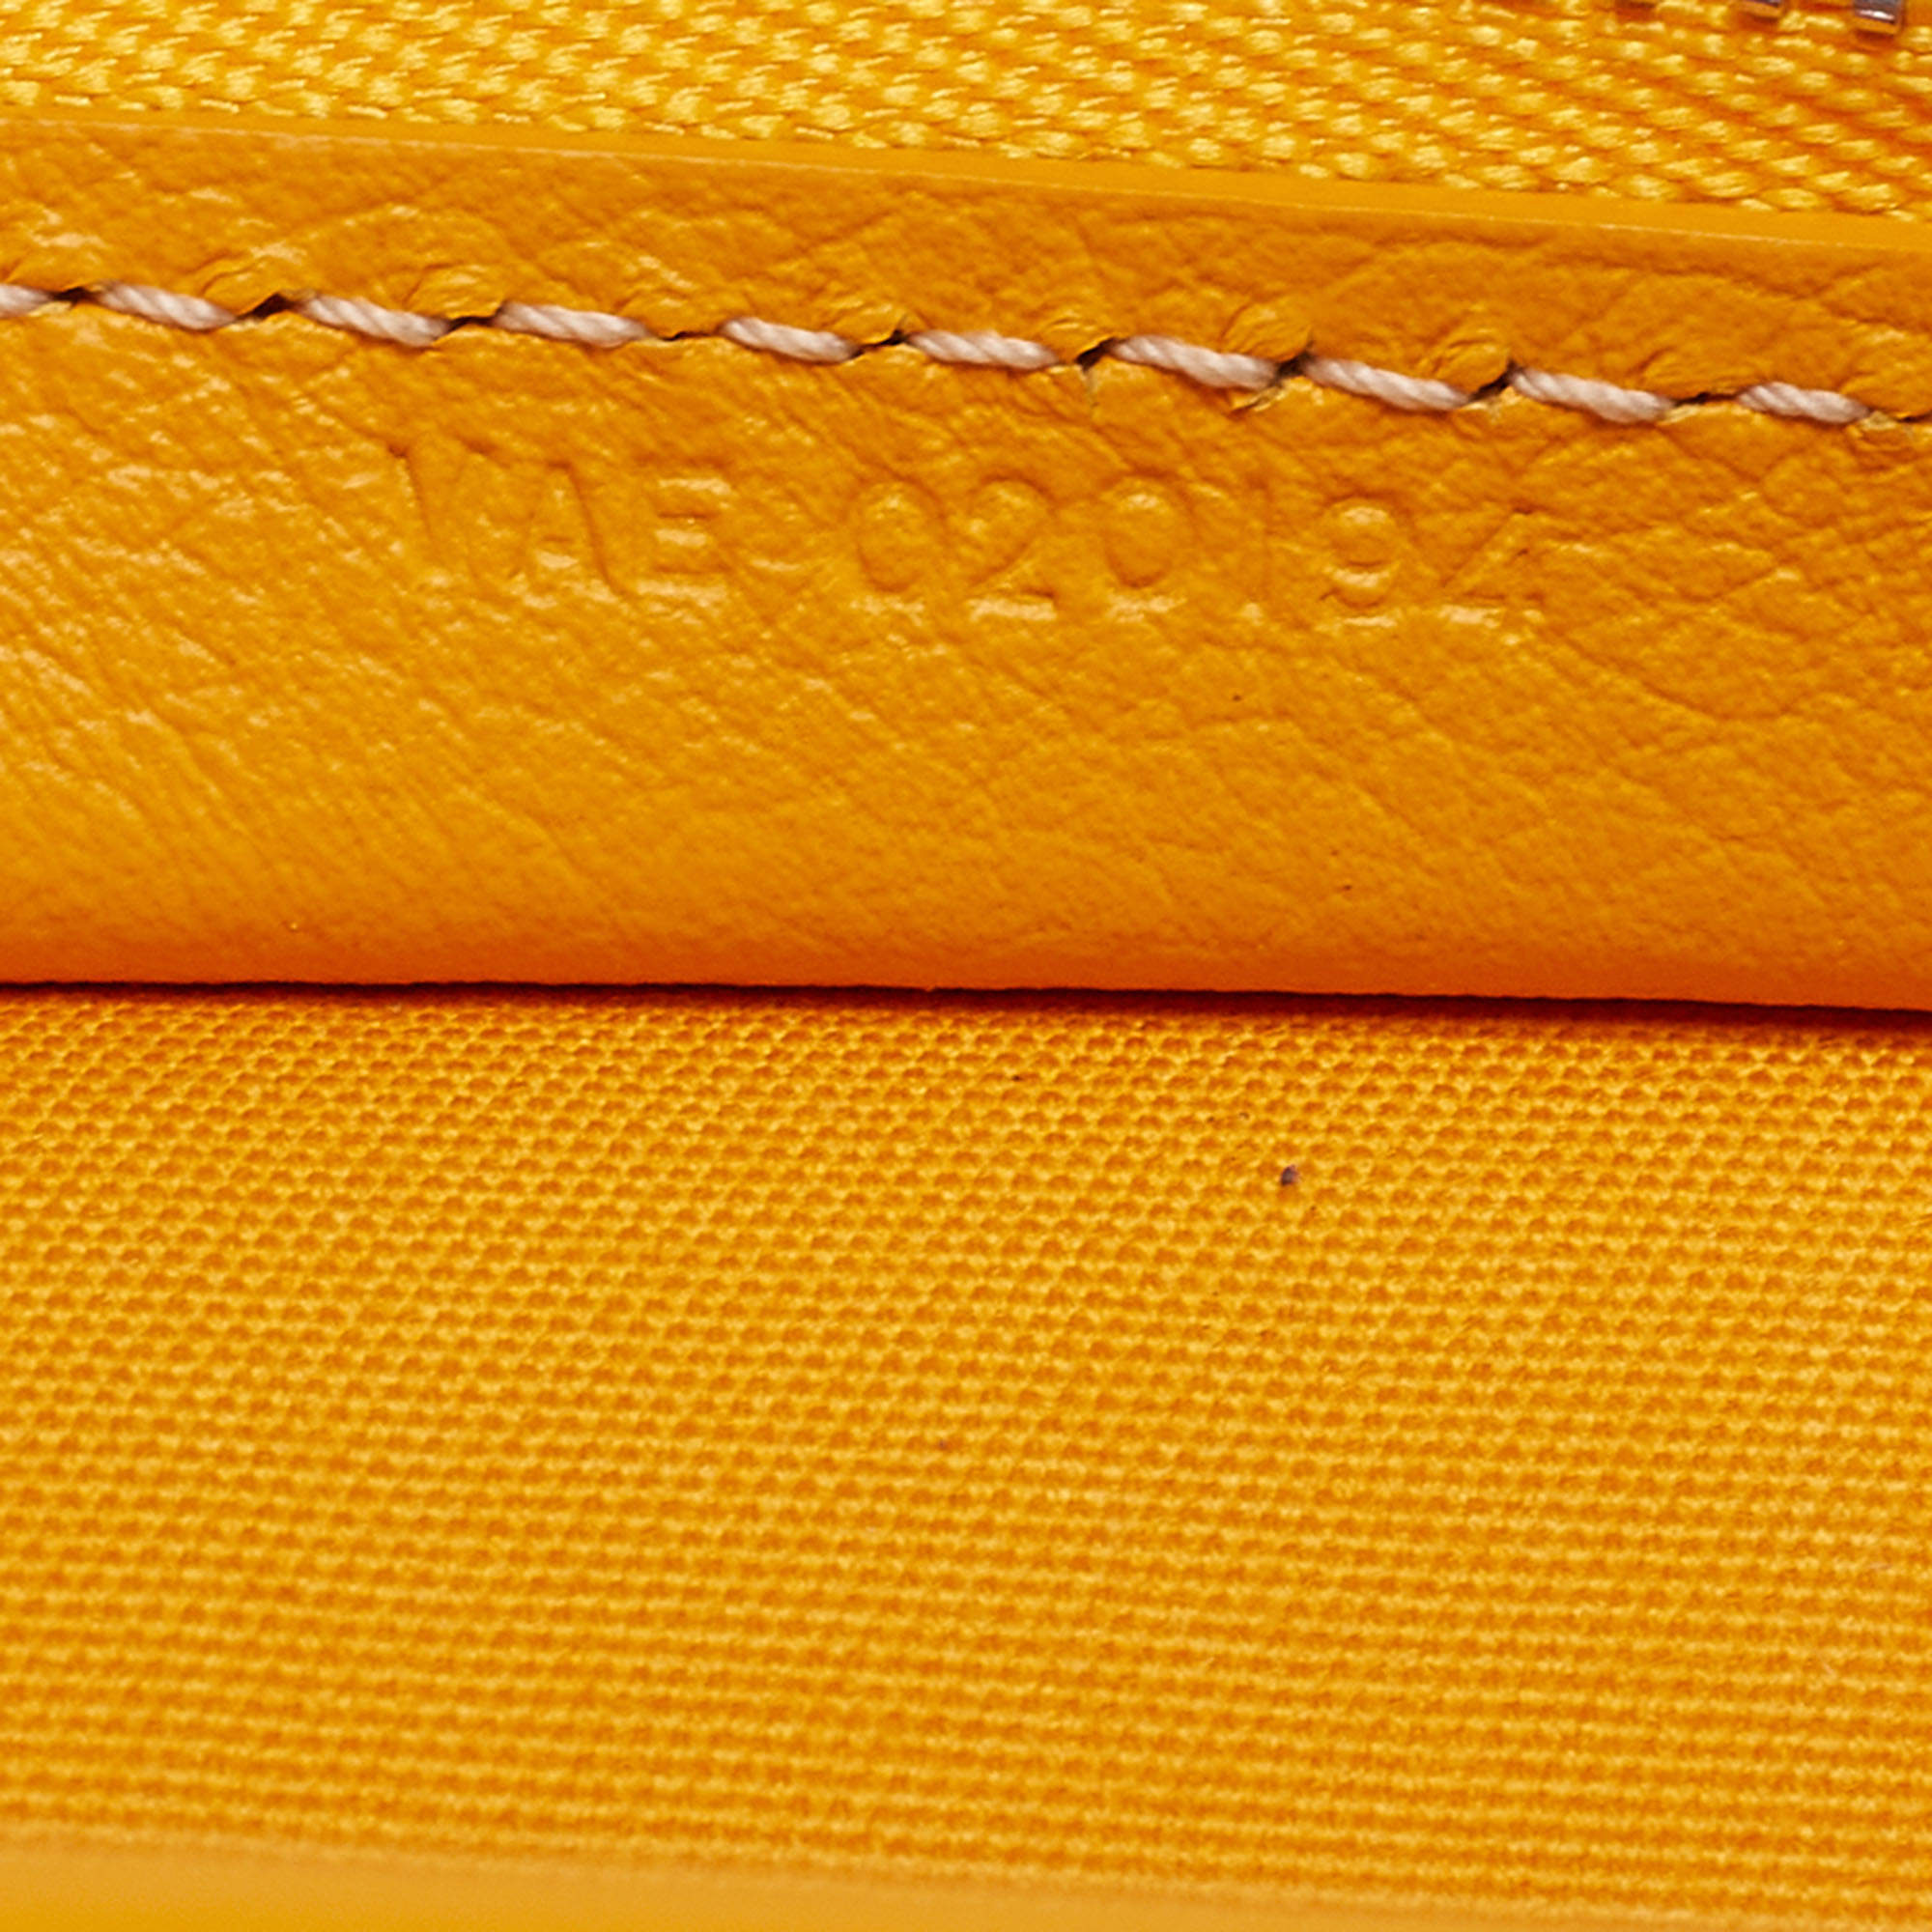 NWT Goyard Jouvence MM Toiletry Bag Yellow Clutch Zip Rare Cosmetic Case